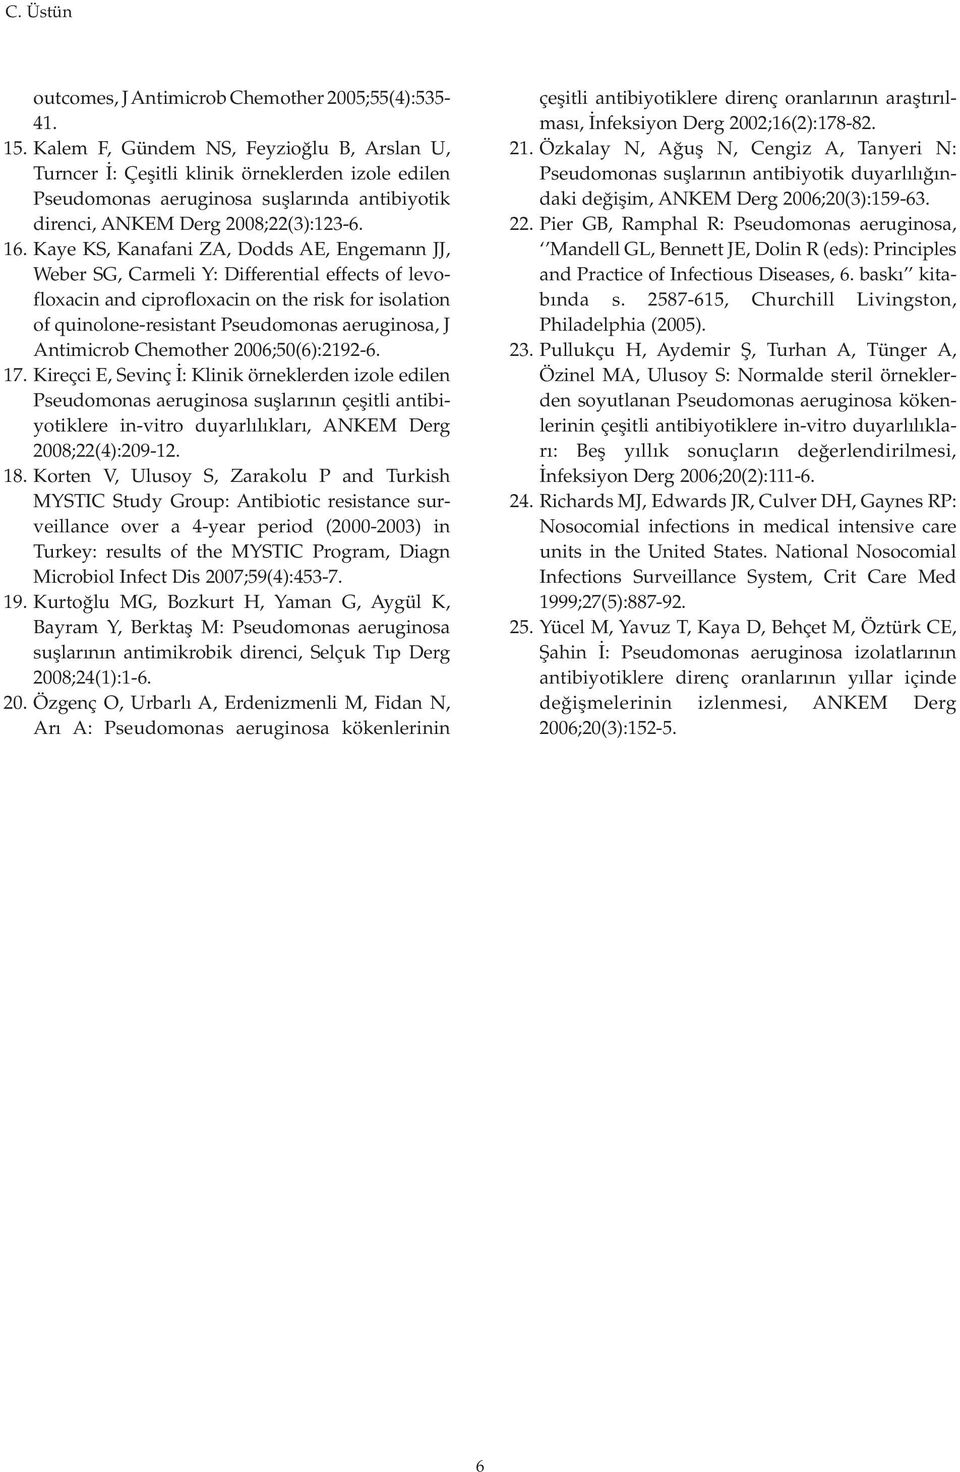 Kaye KS, Kanafani ZA, Dodds AE, Engemann JJ, Weber SG, Carmeli Y: Differential effects of levofloxacin and ciprofloxacin on the risk for isolation of quinoloneresistant Pseudomonas aeruginosa, J